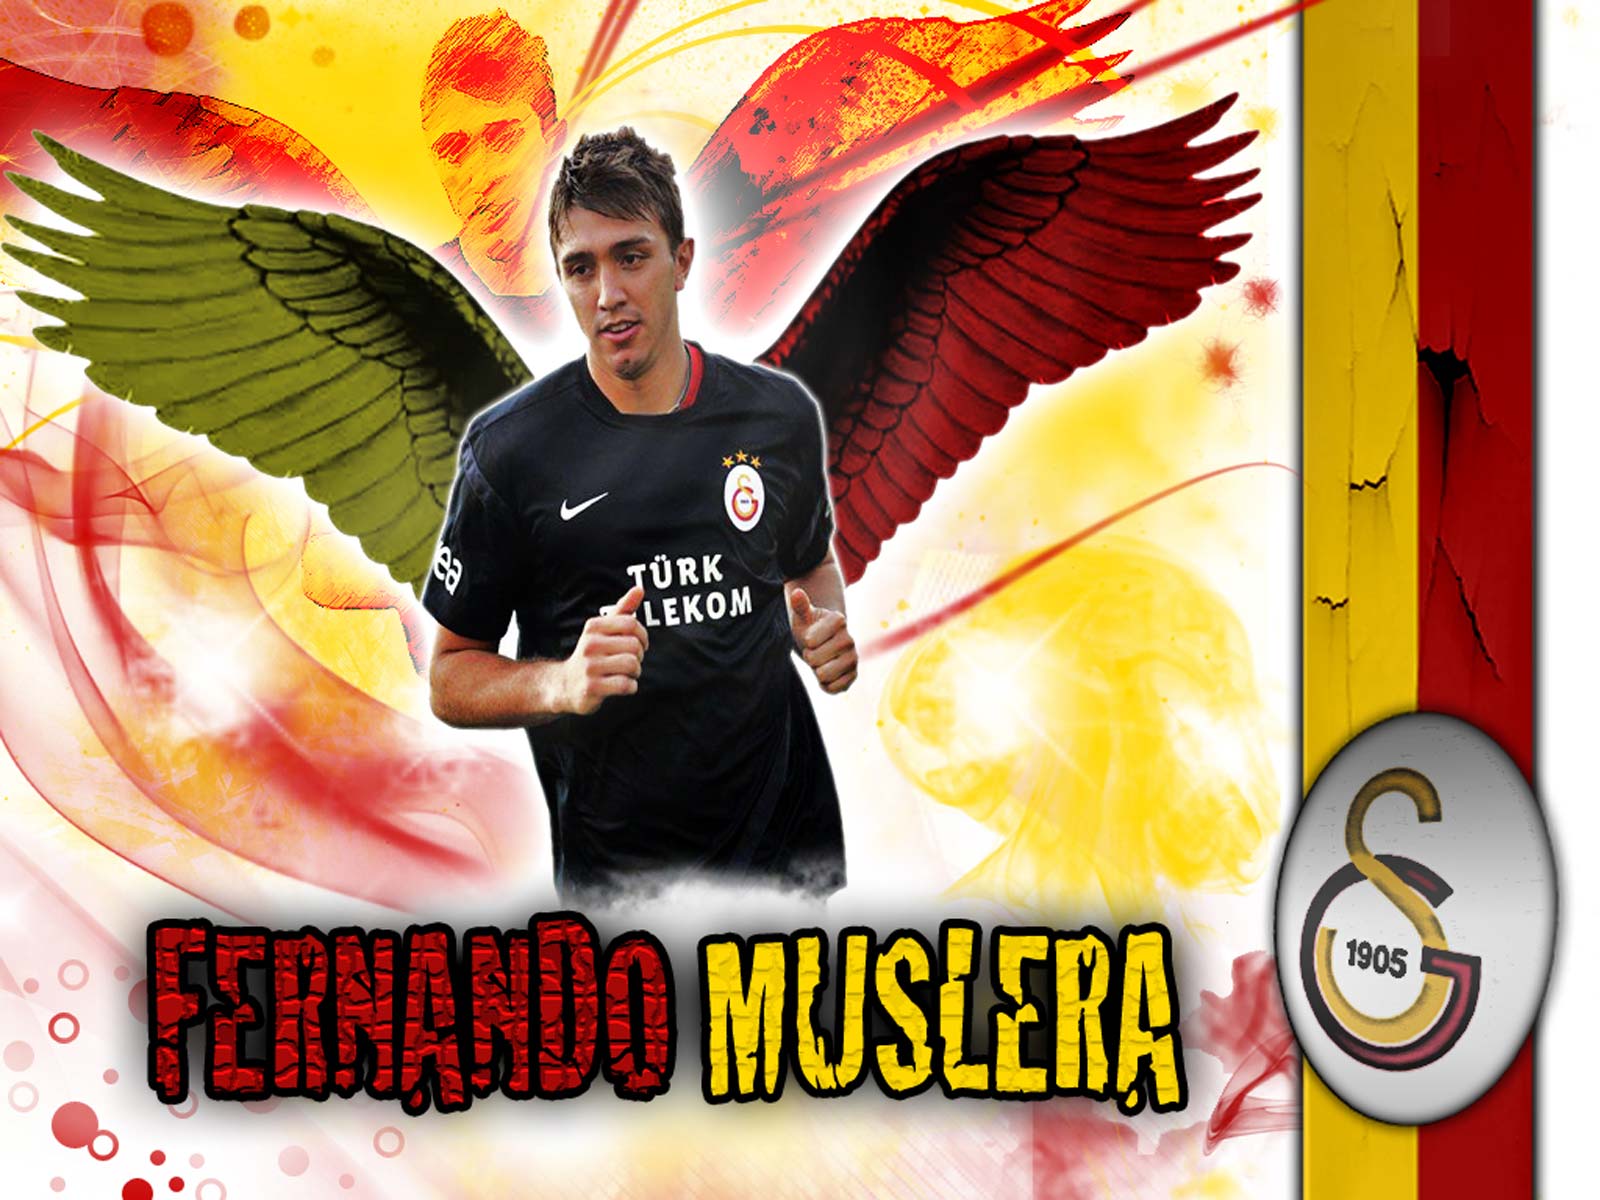 Fernando Muslera Wallpaper. Football Wallpaper Football Players